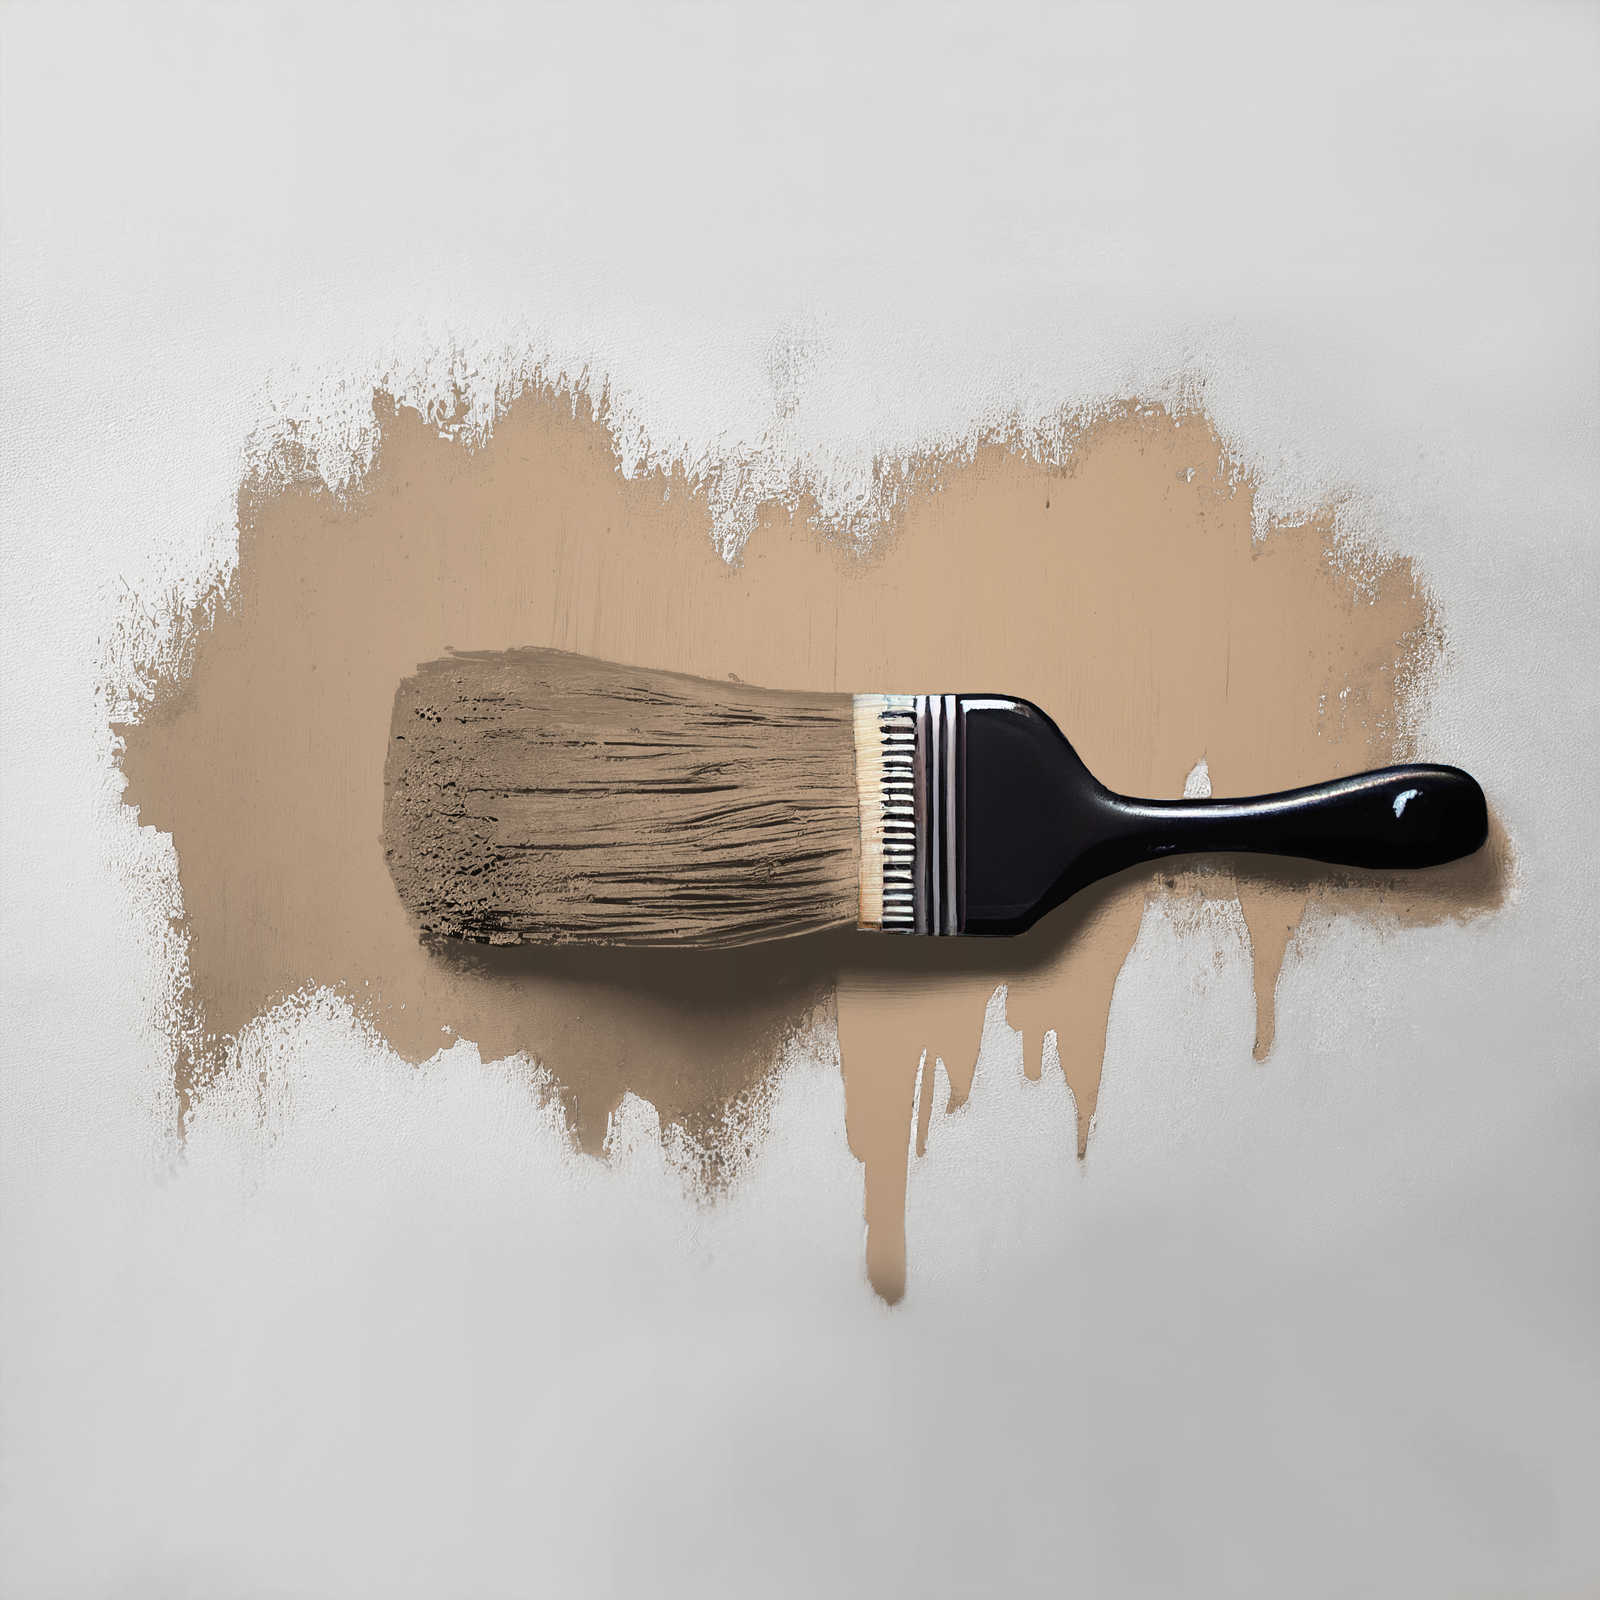             Pittura murale TCK6011 »Whispy Walnut« in beige intenso – 2,5 litri
        